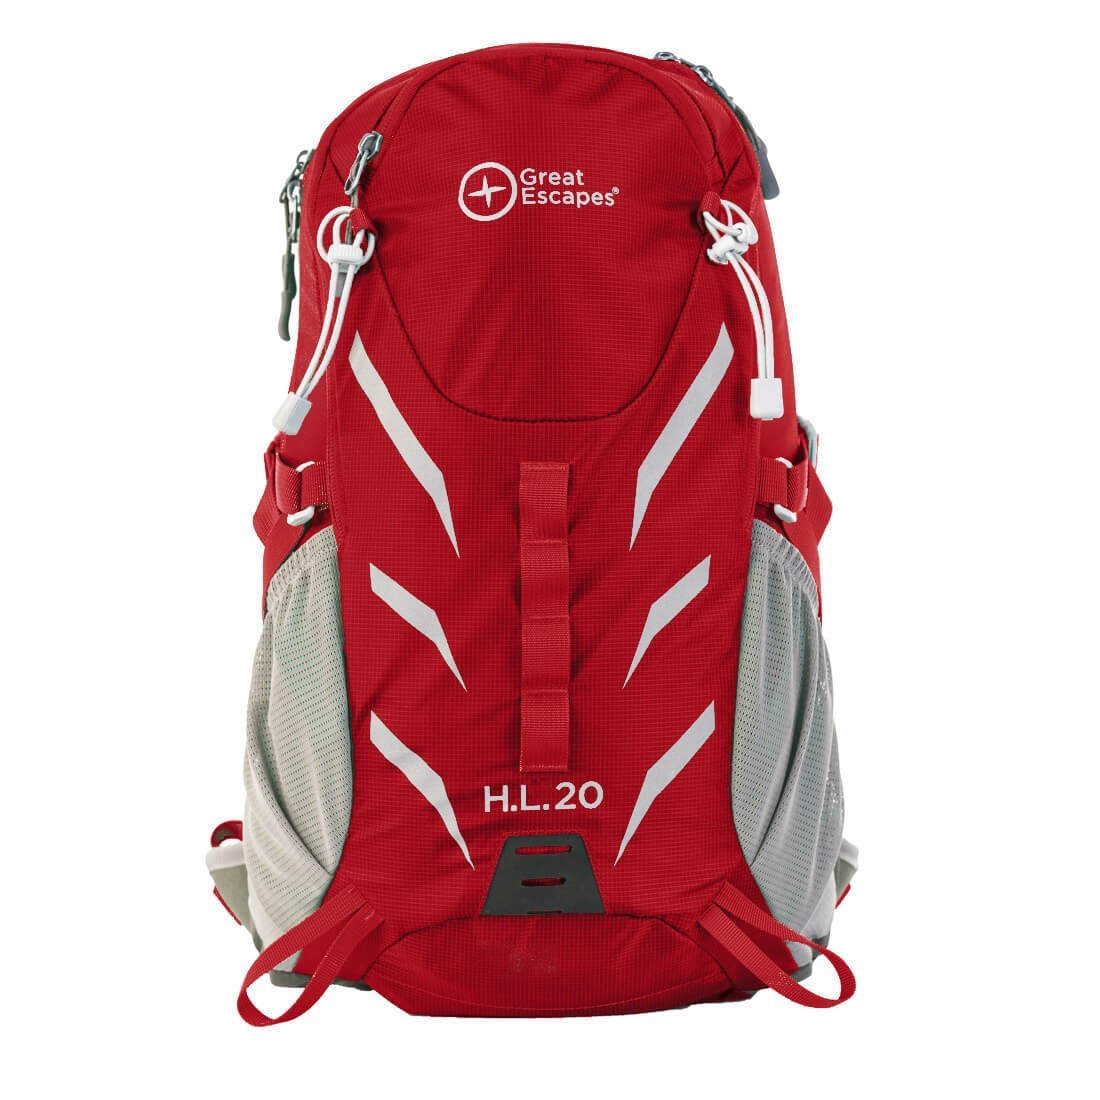 H.L. 20 - Trekking backpack 20 liters